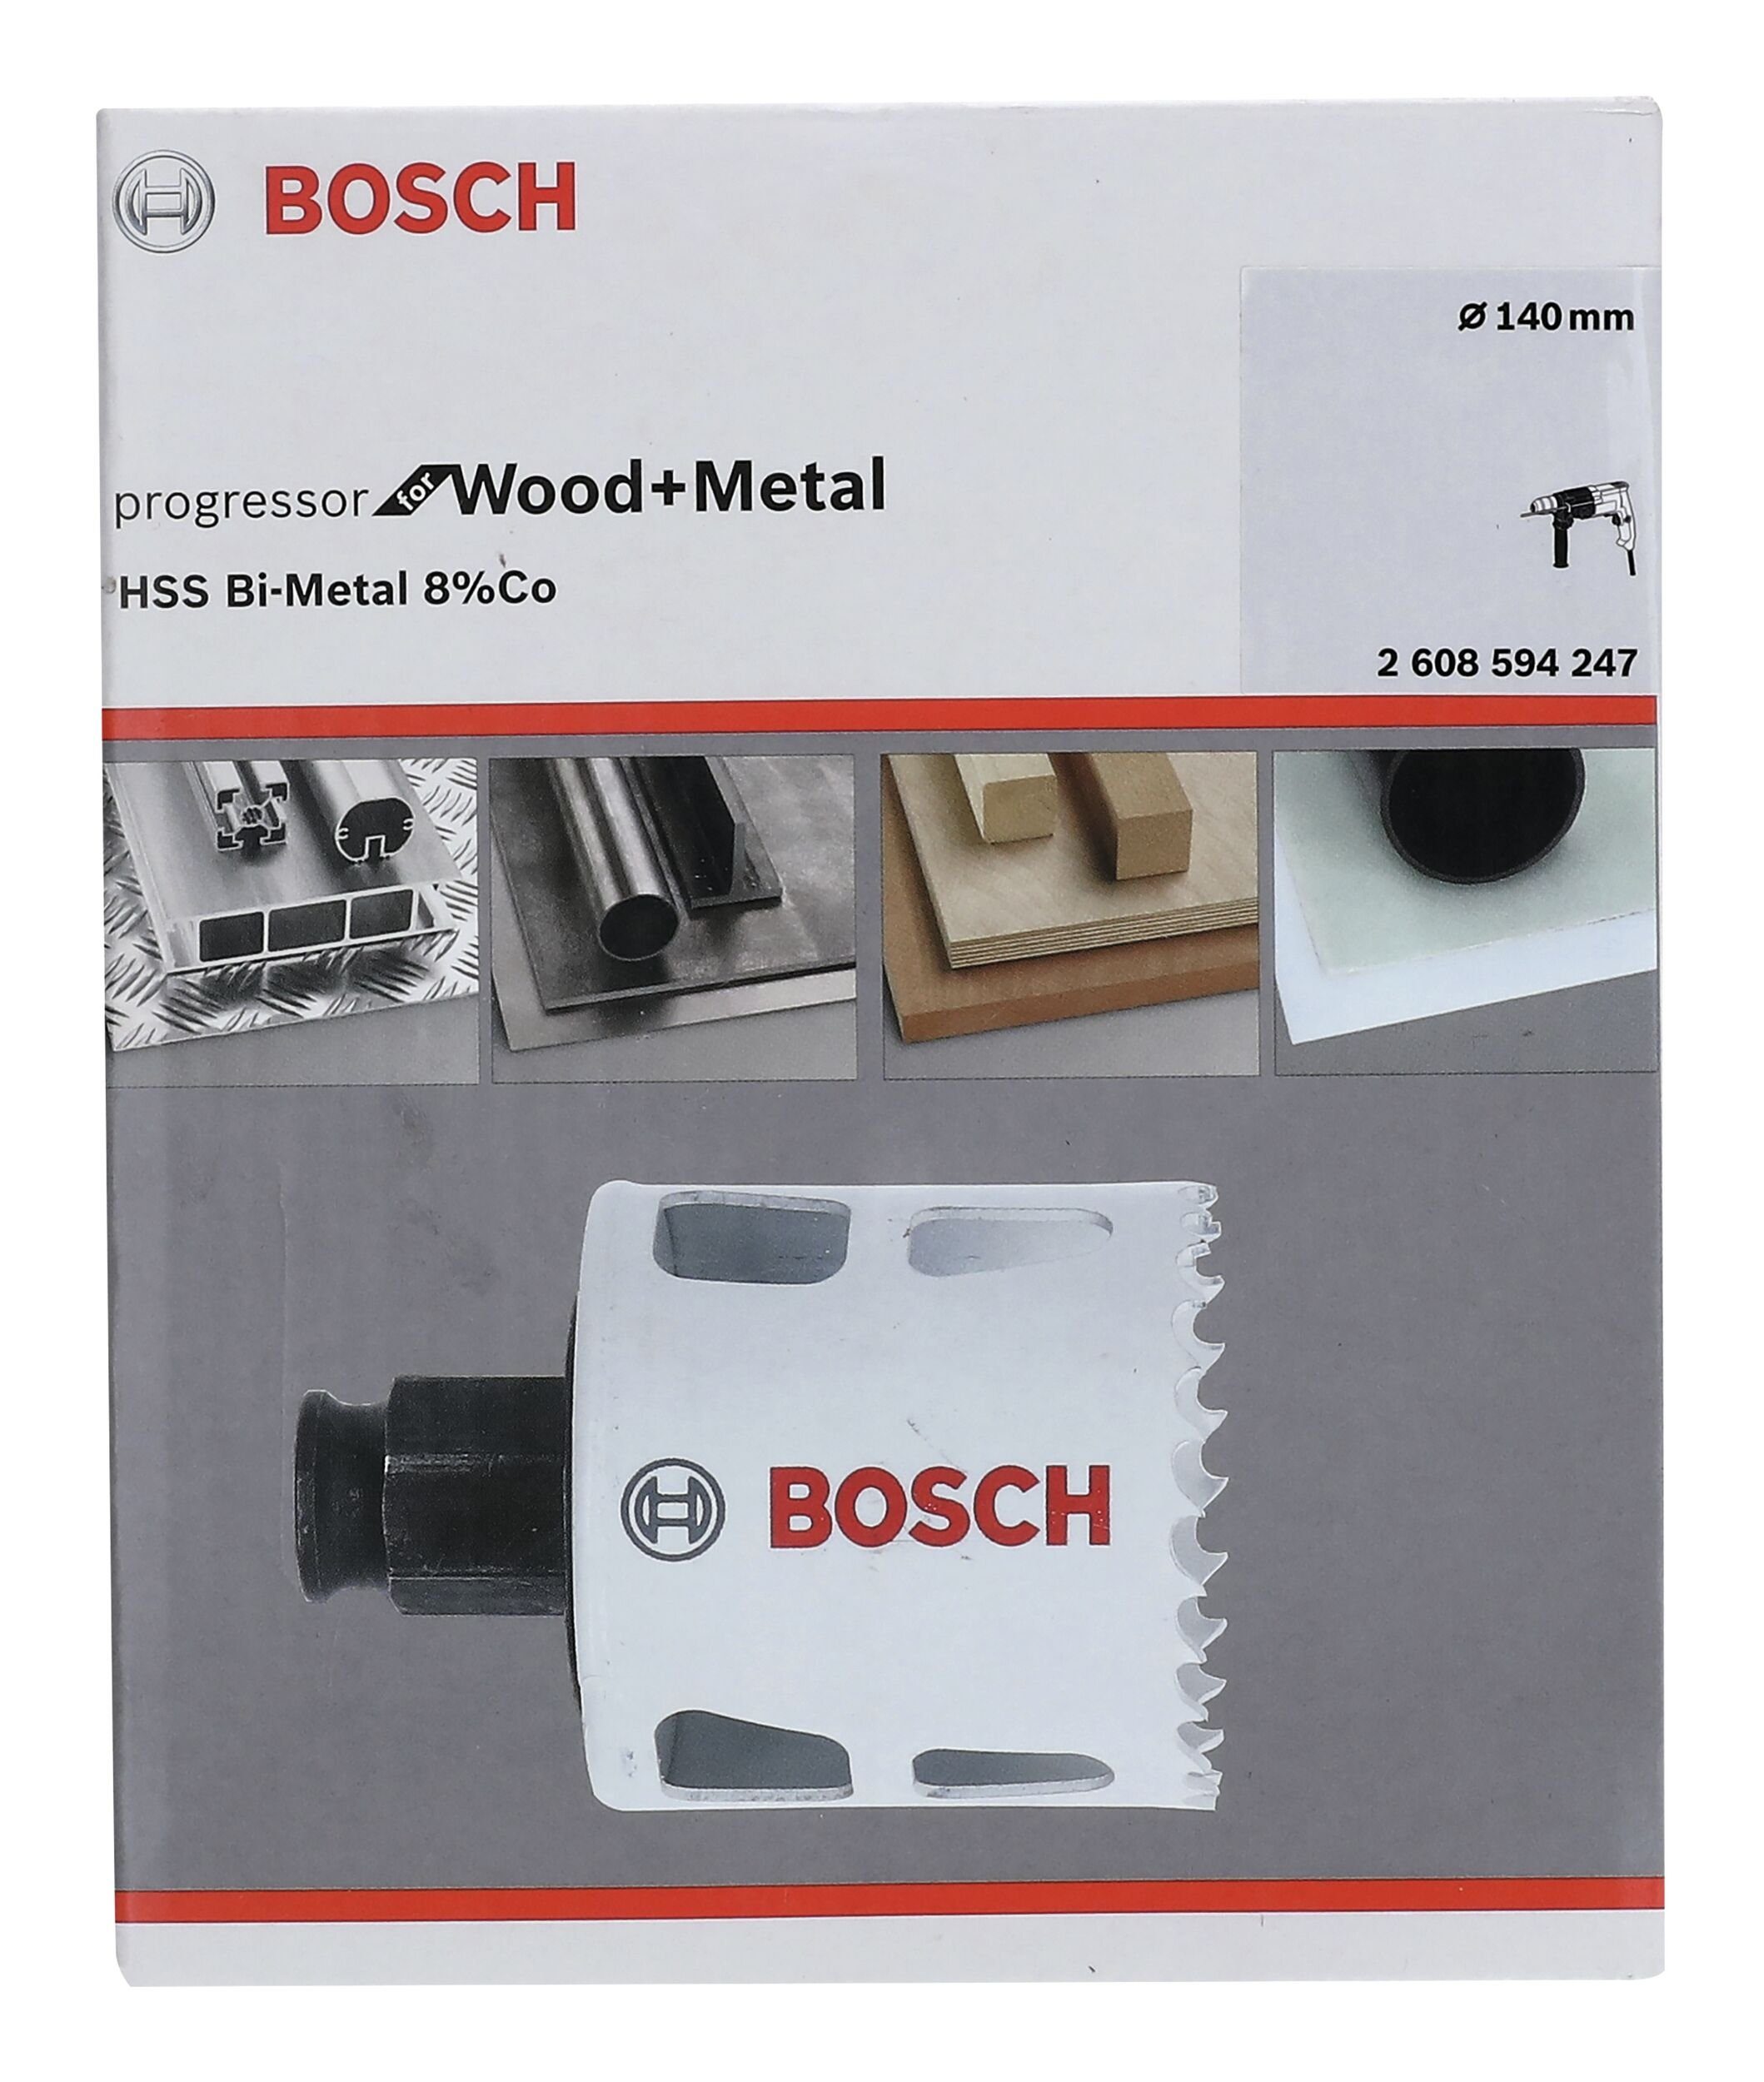 for Ø mm, Wood 177 BOSCH Lochsäge, Progressor and Metal